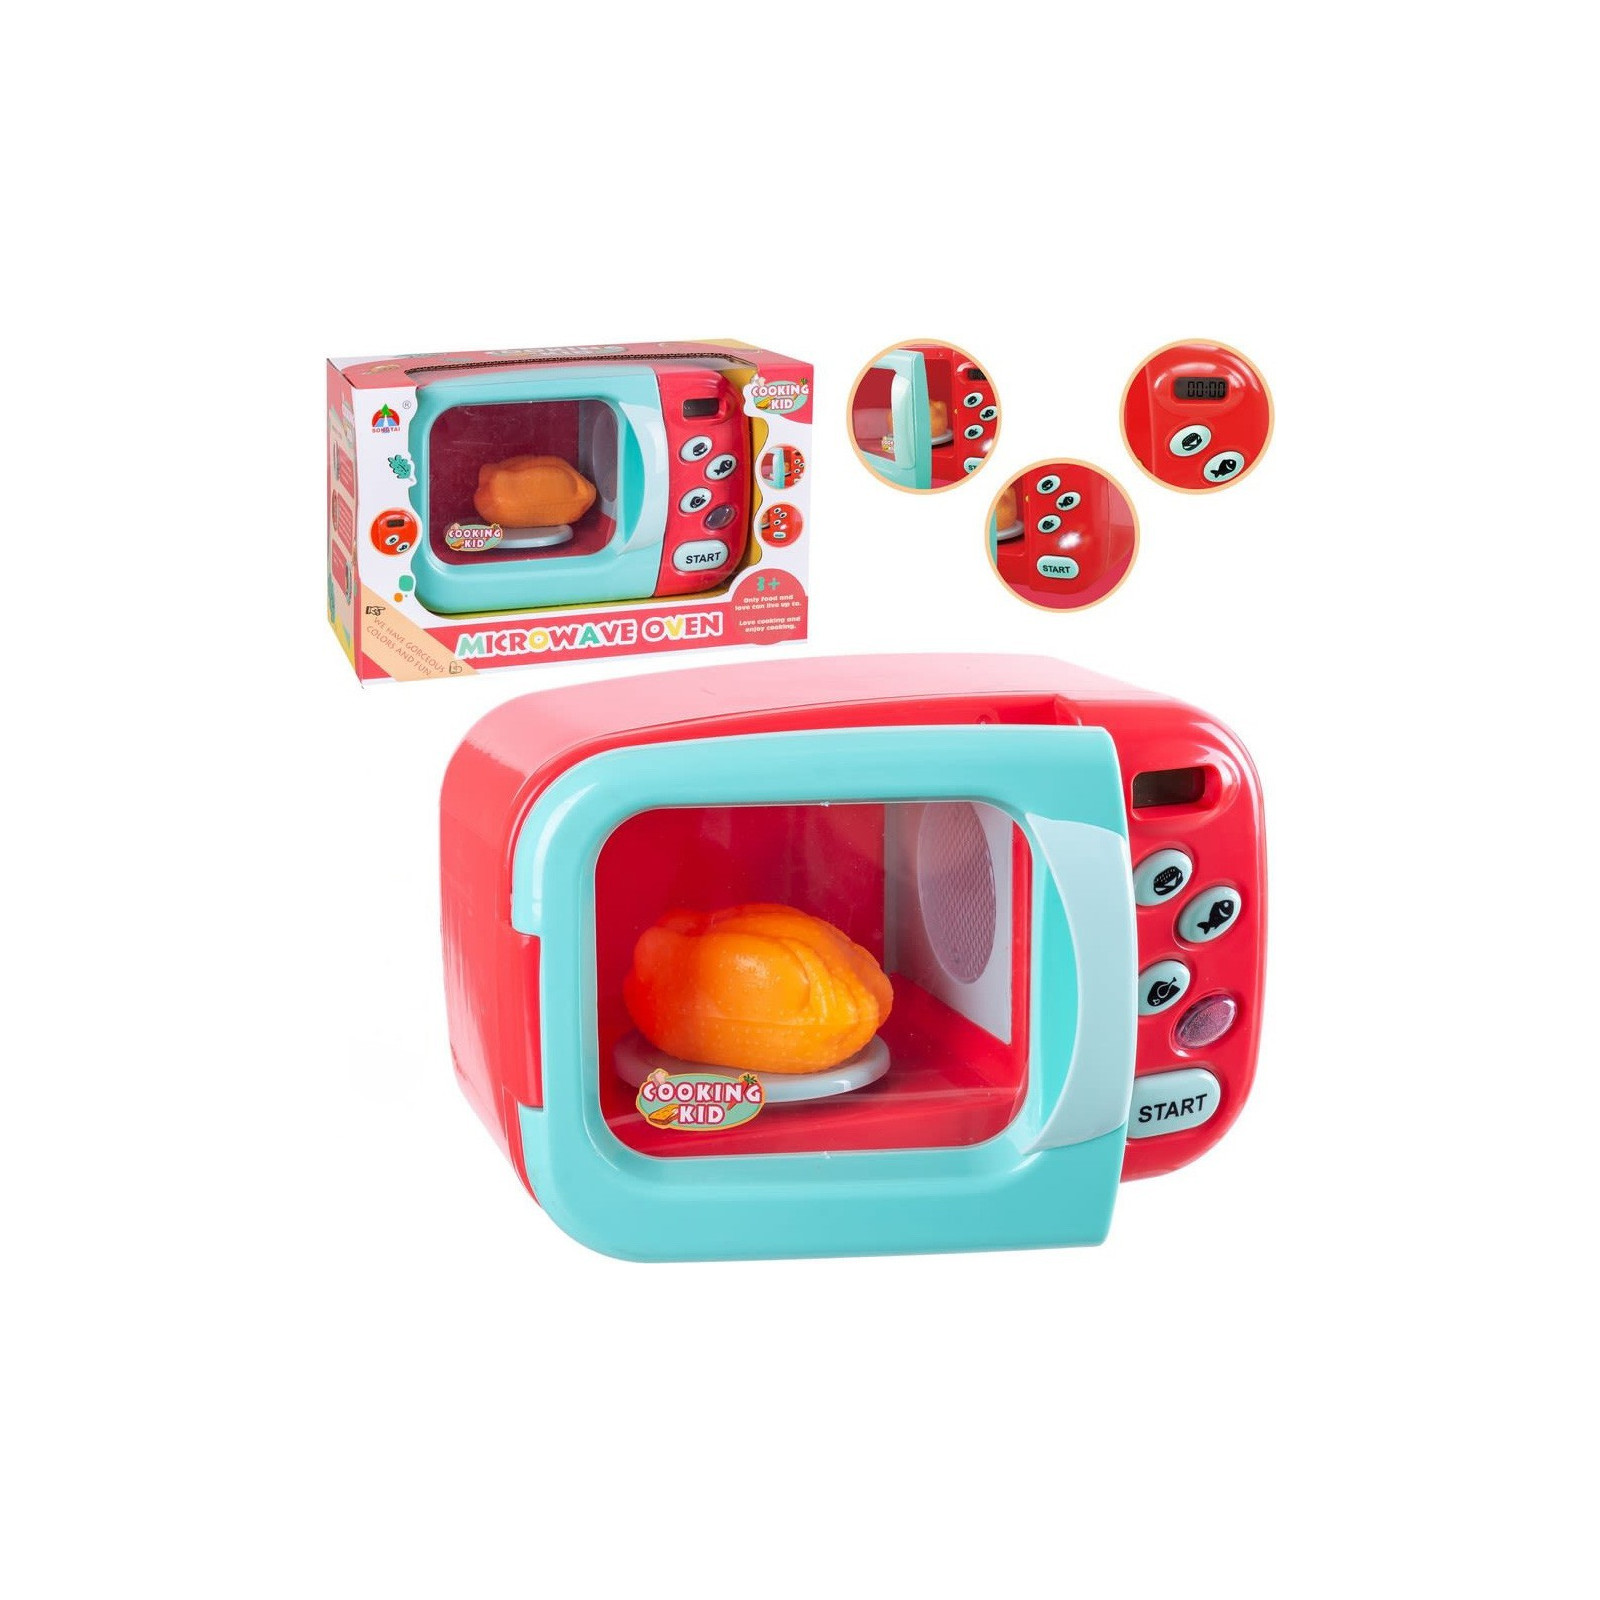 Microondas de juguete con pantalla lcd para niños